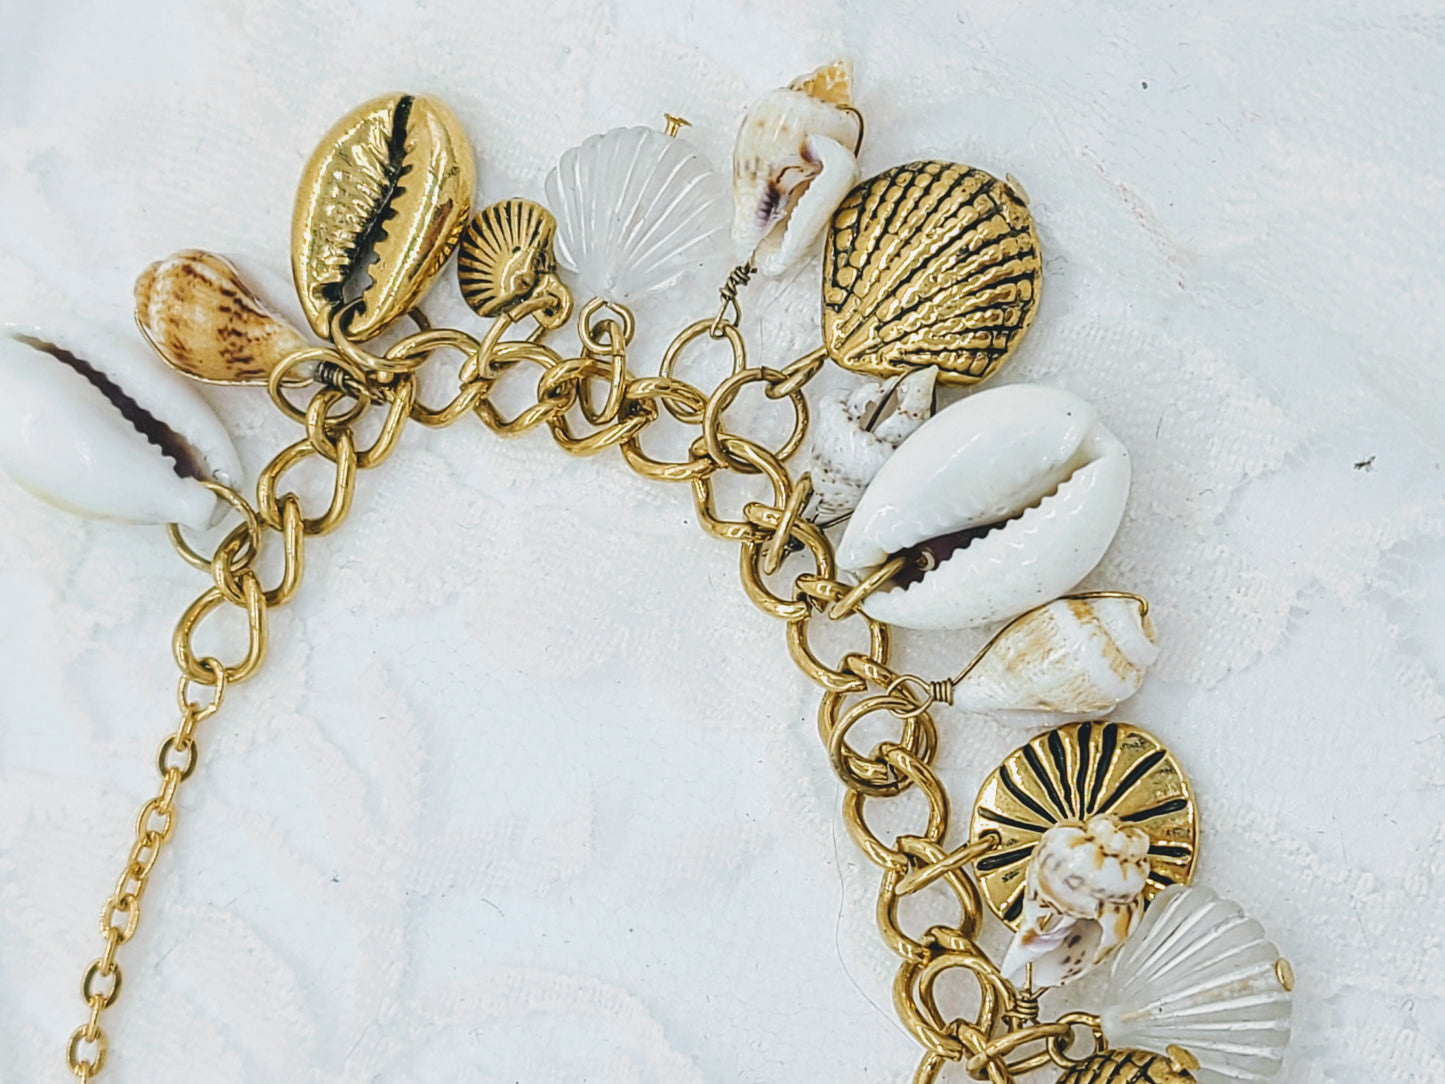 Ocean Dreams Handmade Beaded Charm Bracelet ~ OOAK ~ Authentic Seashells, Czech Glass, and Gold Shell Charms